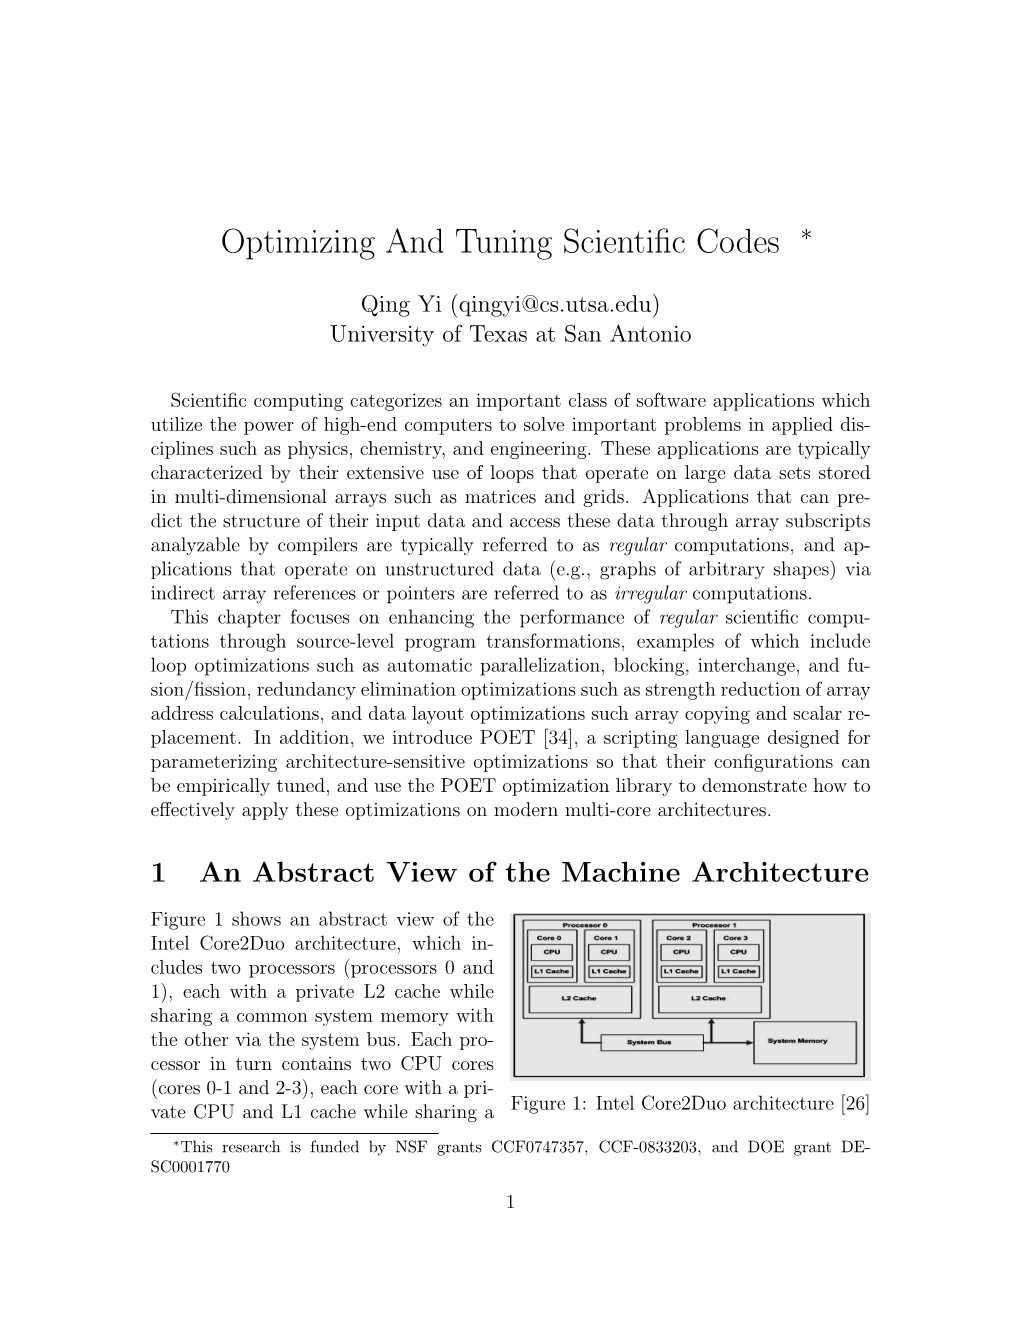 Optimizing and Tuning Scientific Codes